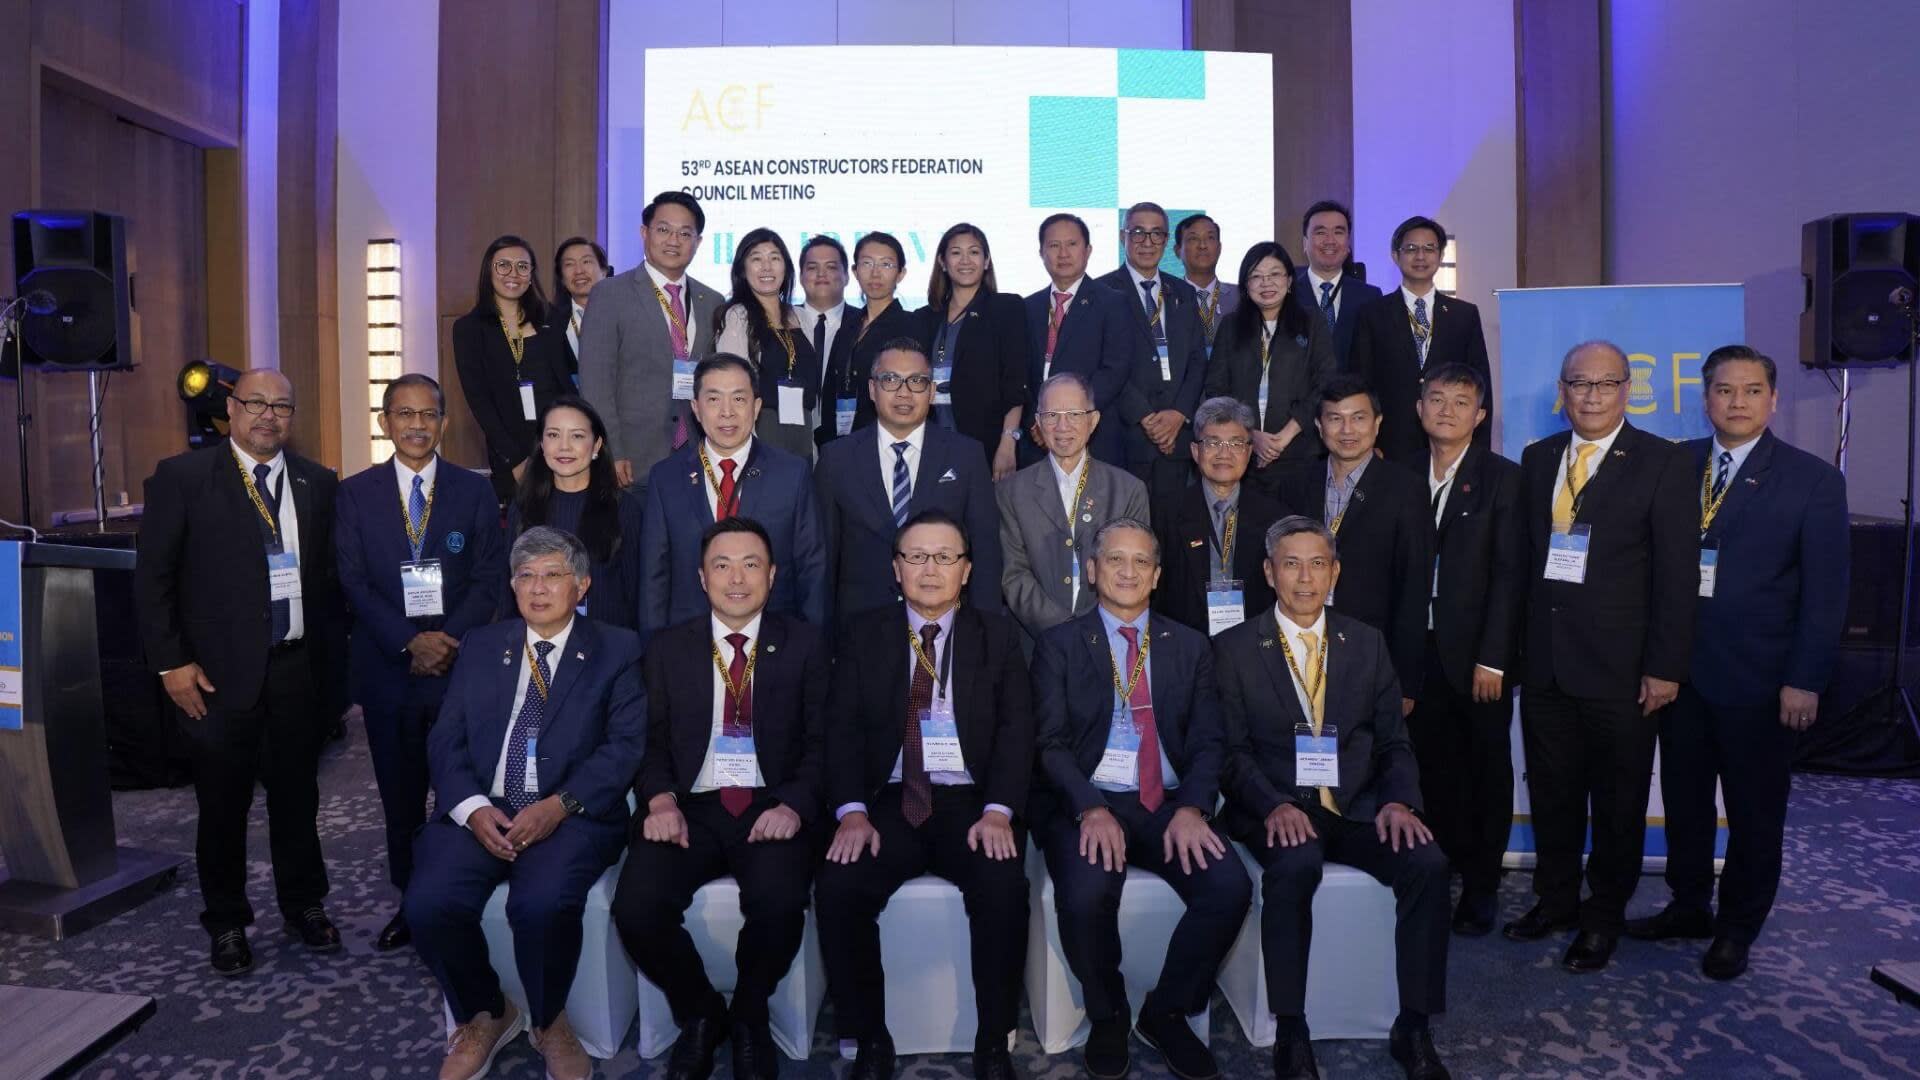 ASEAN Constructors Federation members posing for the camera